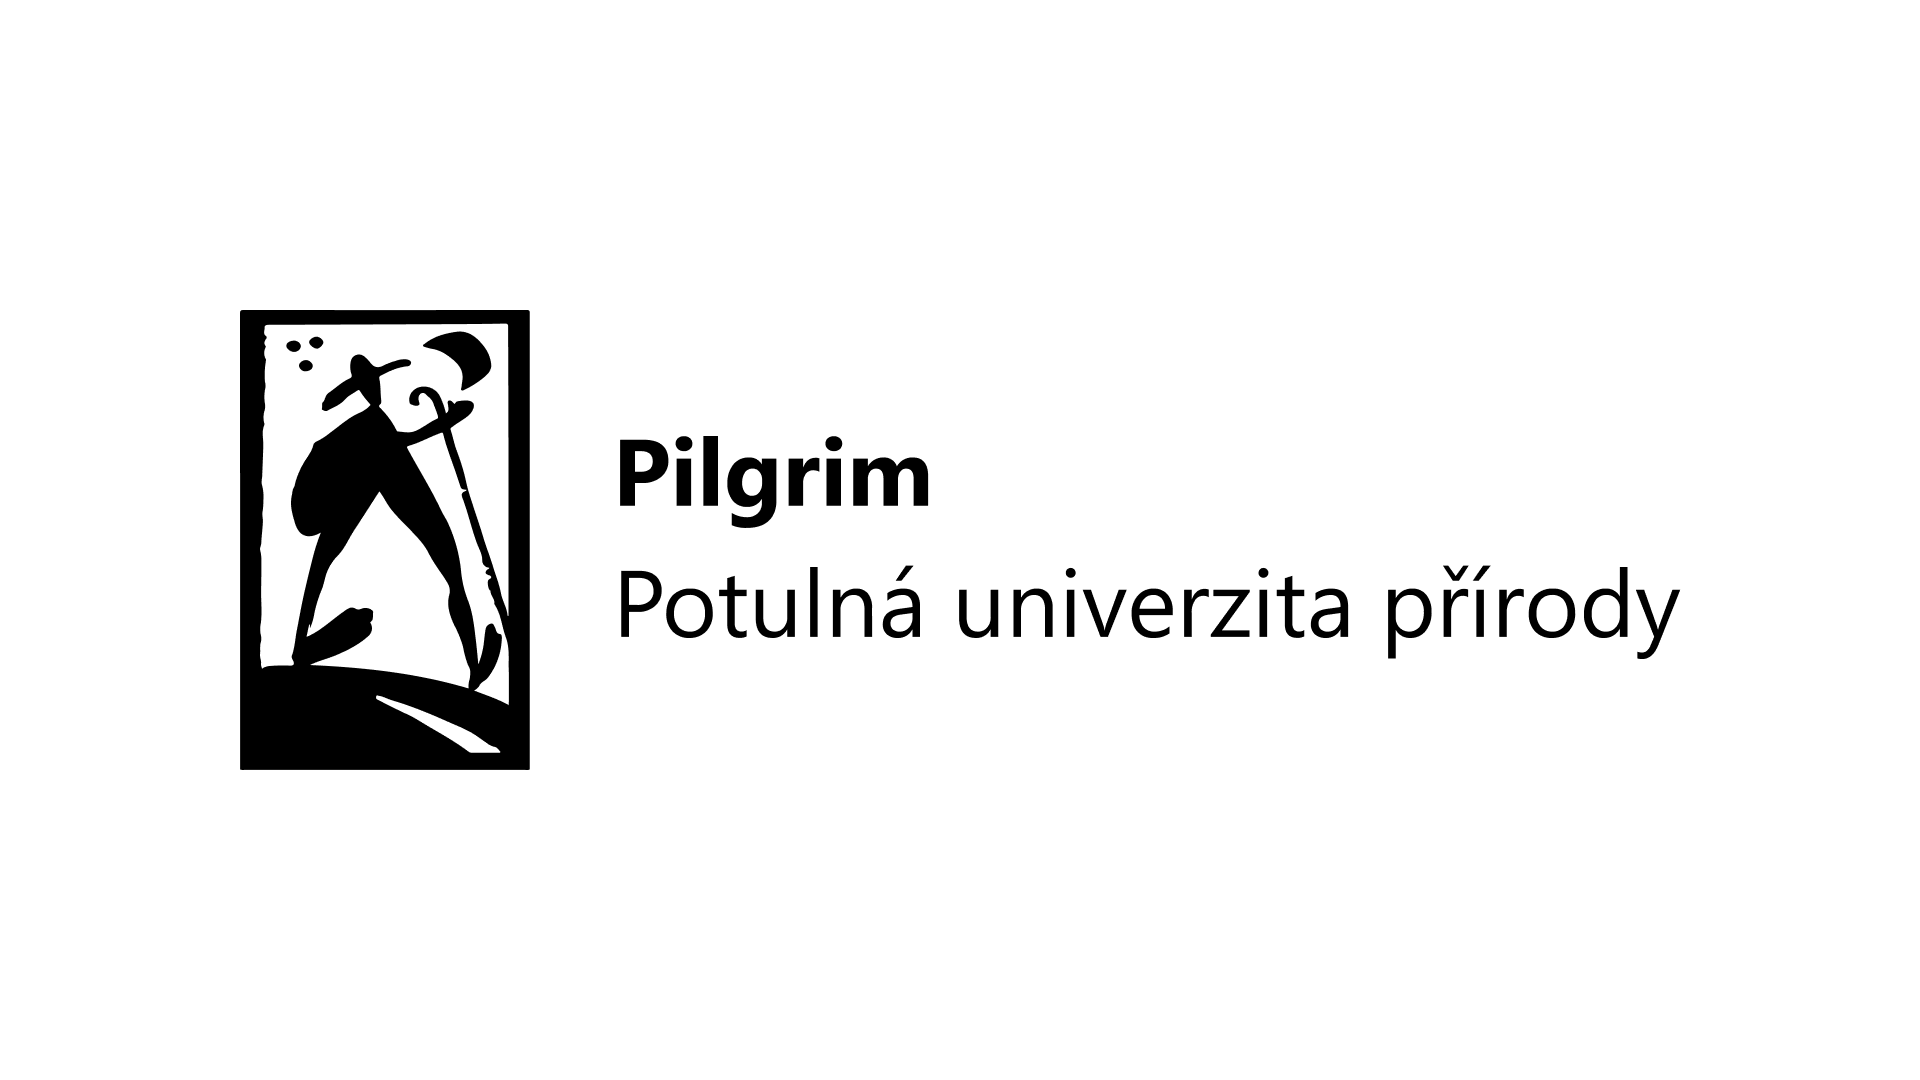 Pilgrim ― Potulná univerzita přírody